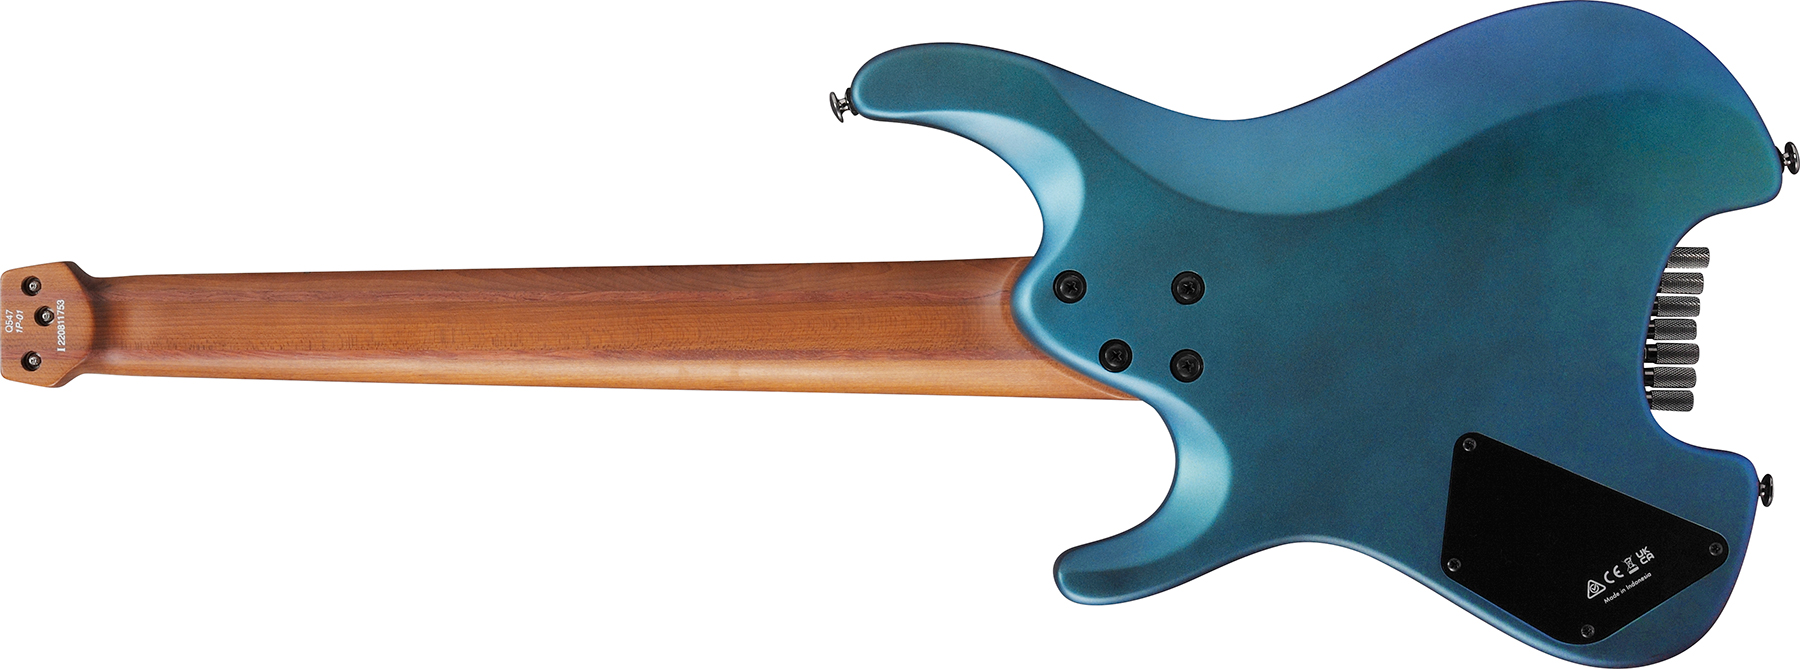 Ibanez Q547 Bmm Quest 7c Hss Ht Mn - Blue Chameleon Metallic Matte - 7-saitige E-Gitarre - Variation 1